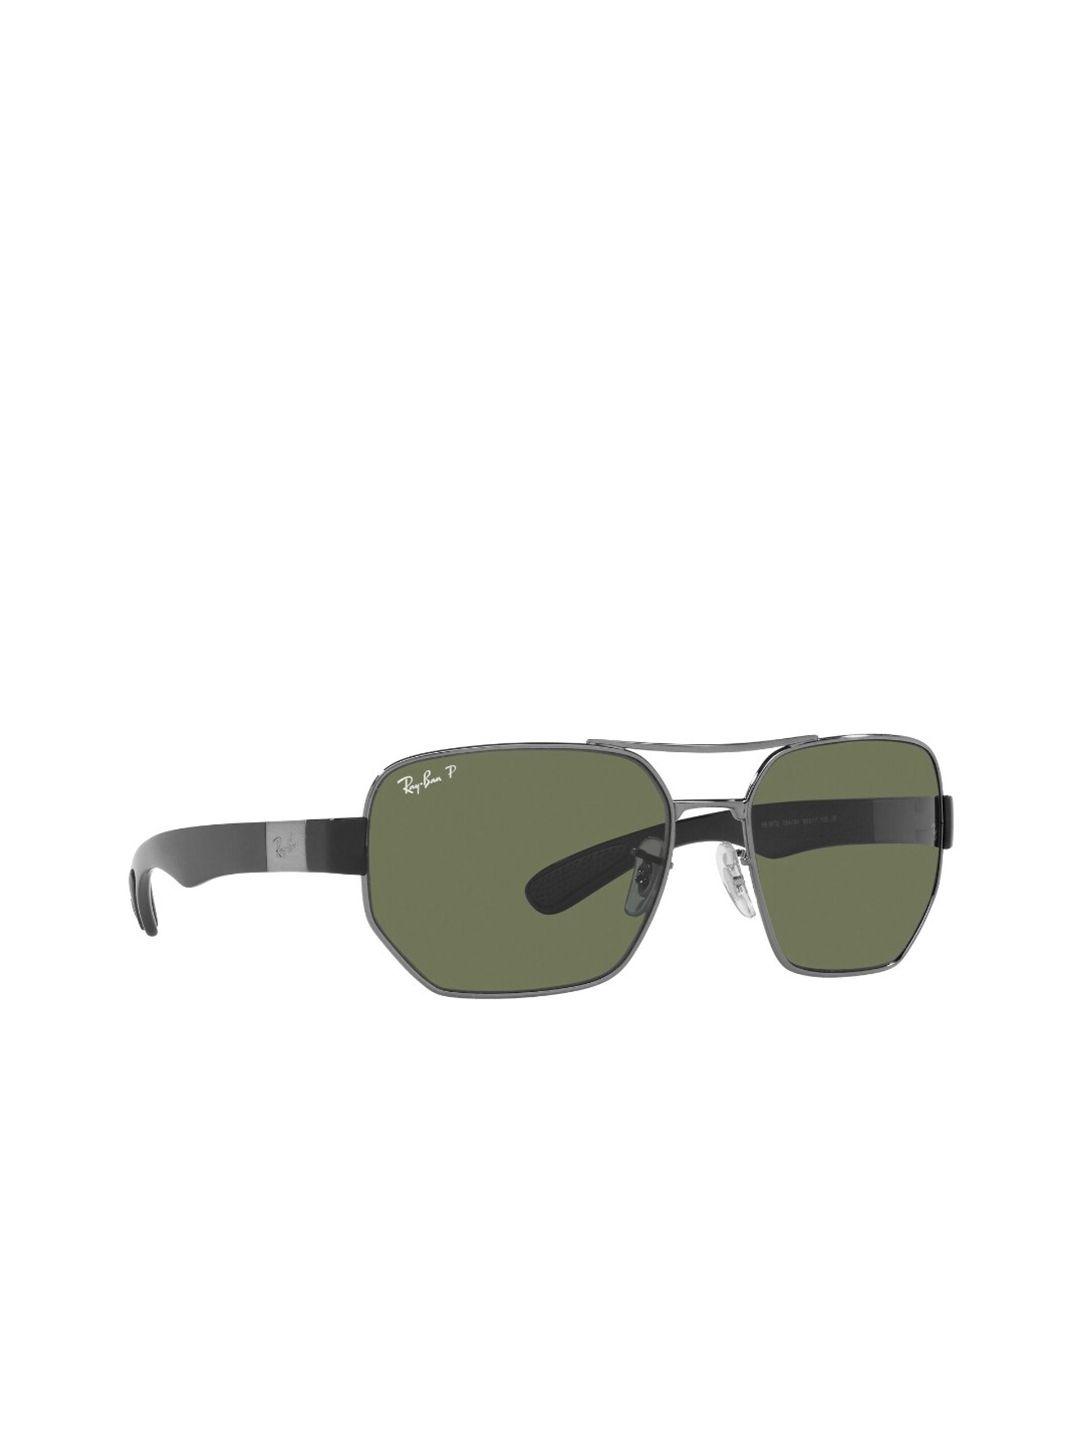 ray-ban unisex green lens & gunmetal-toned oversized sunglasses 8056597432023-green